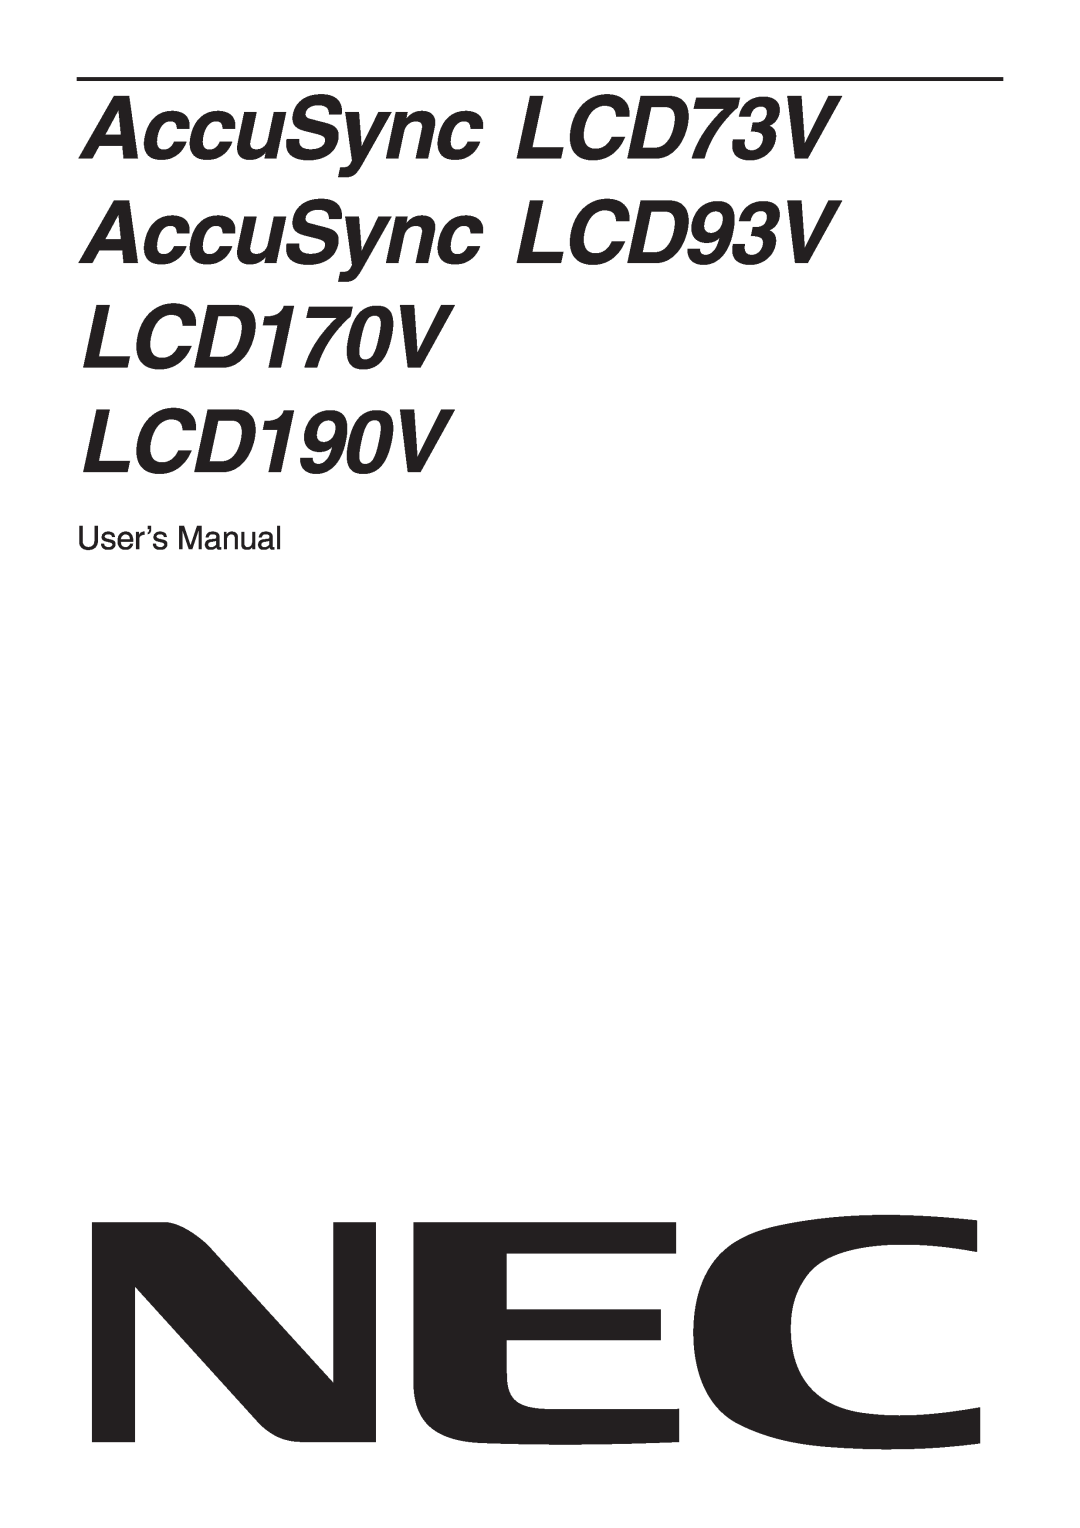 NEC user manual AccuSync LCD73V AccuSync LCD93V LCD170V LCD190V, UserÕs Manual 